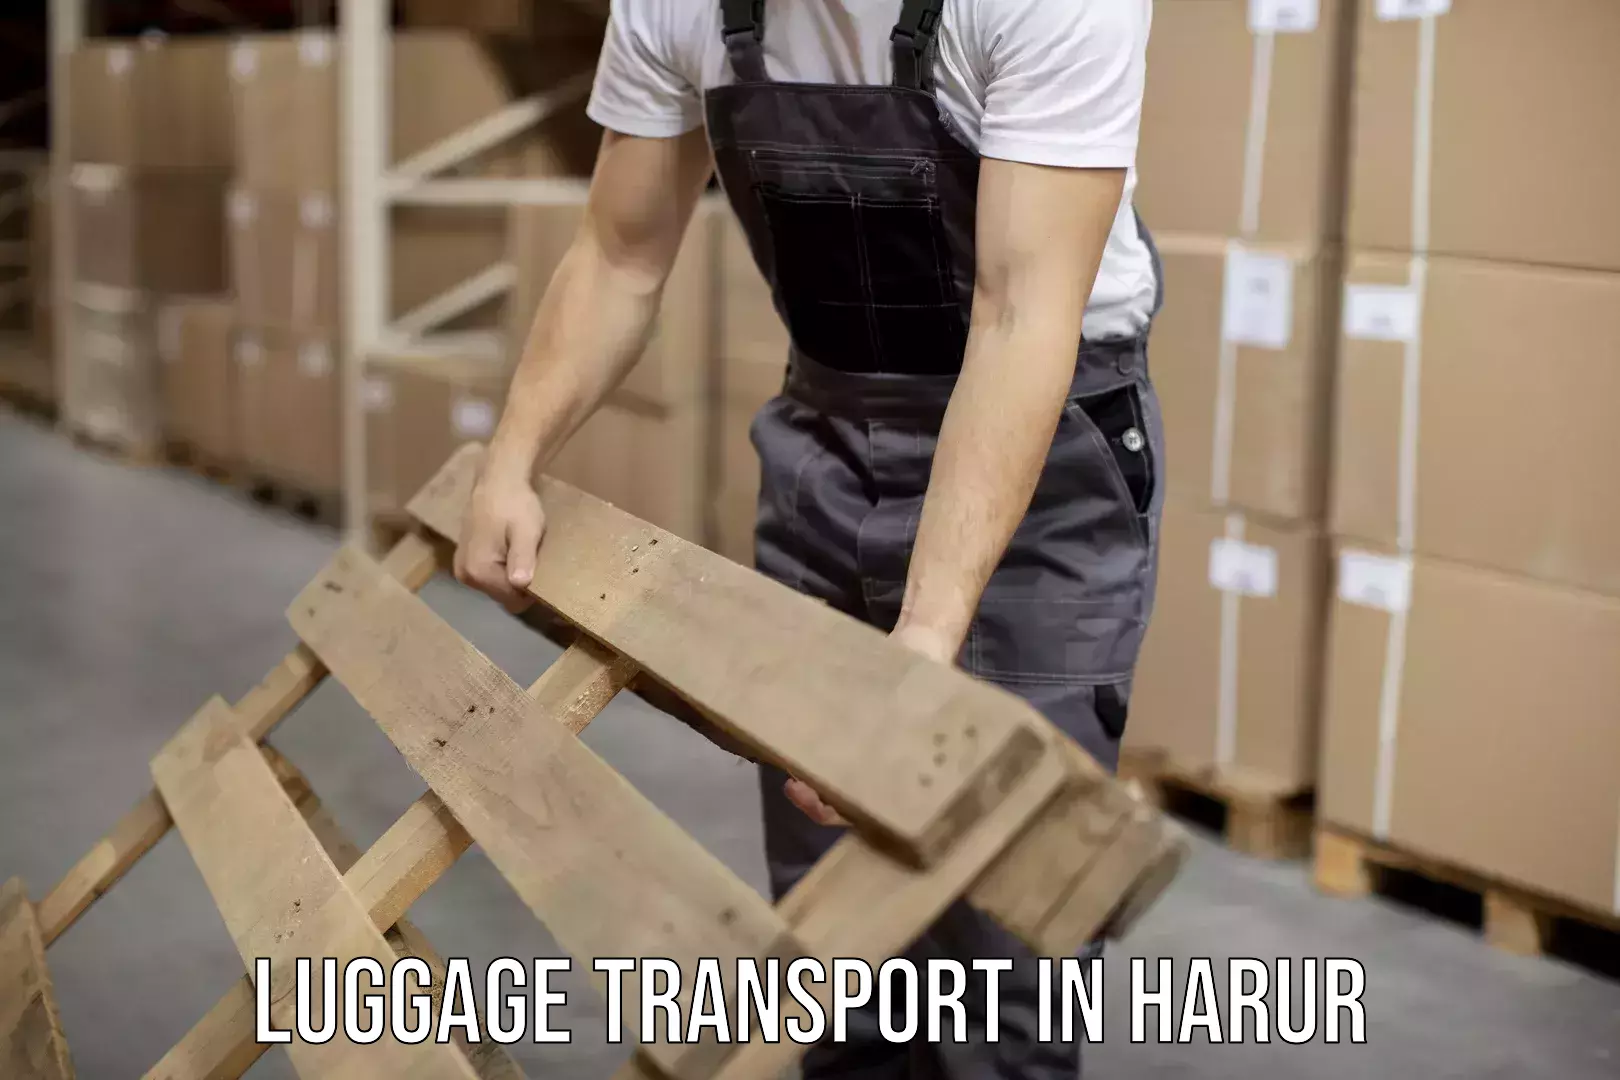 Luggage shipping estimate in Harur